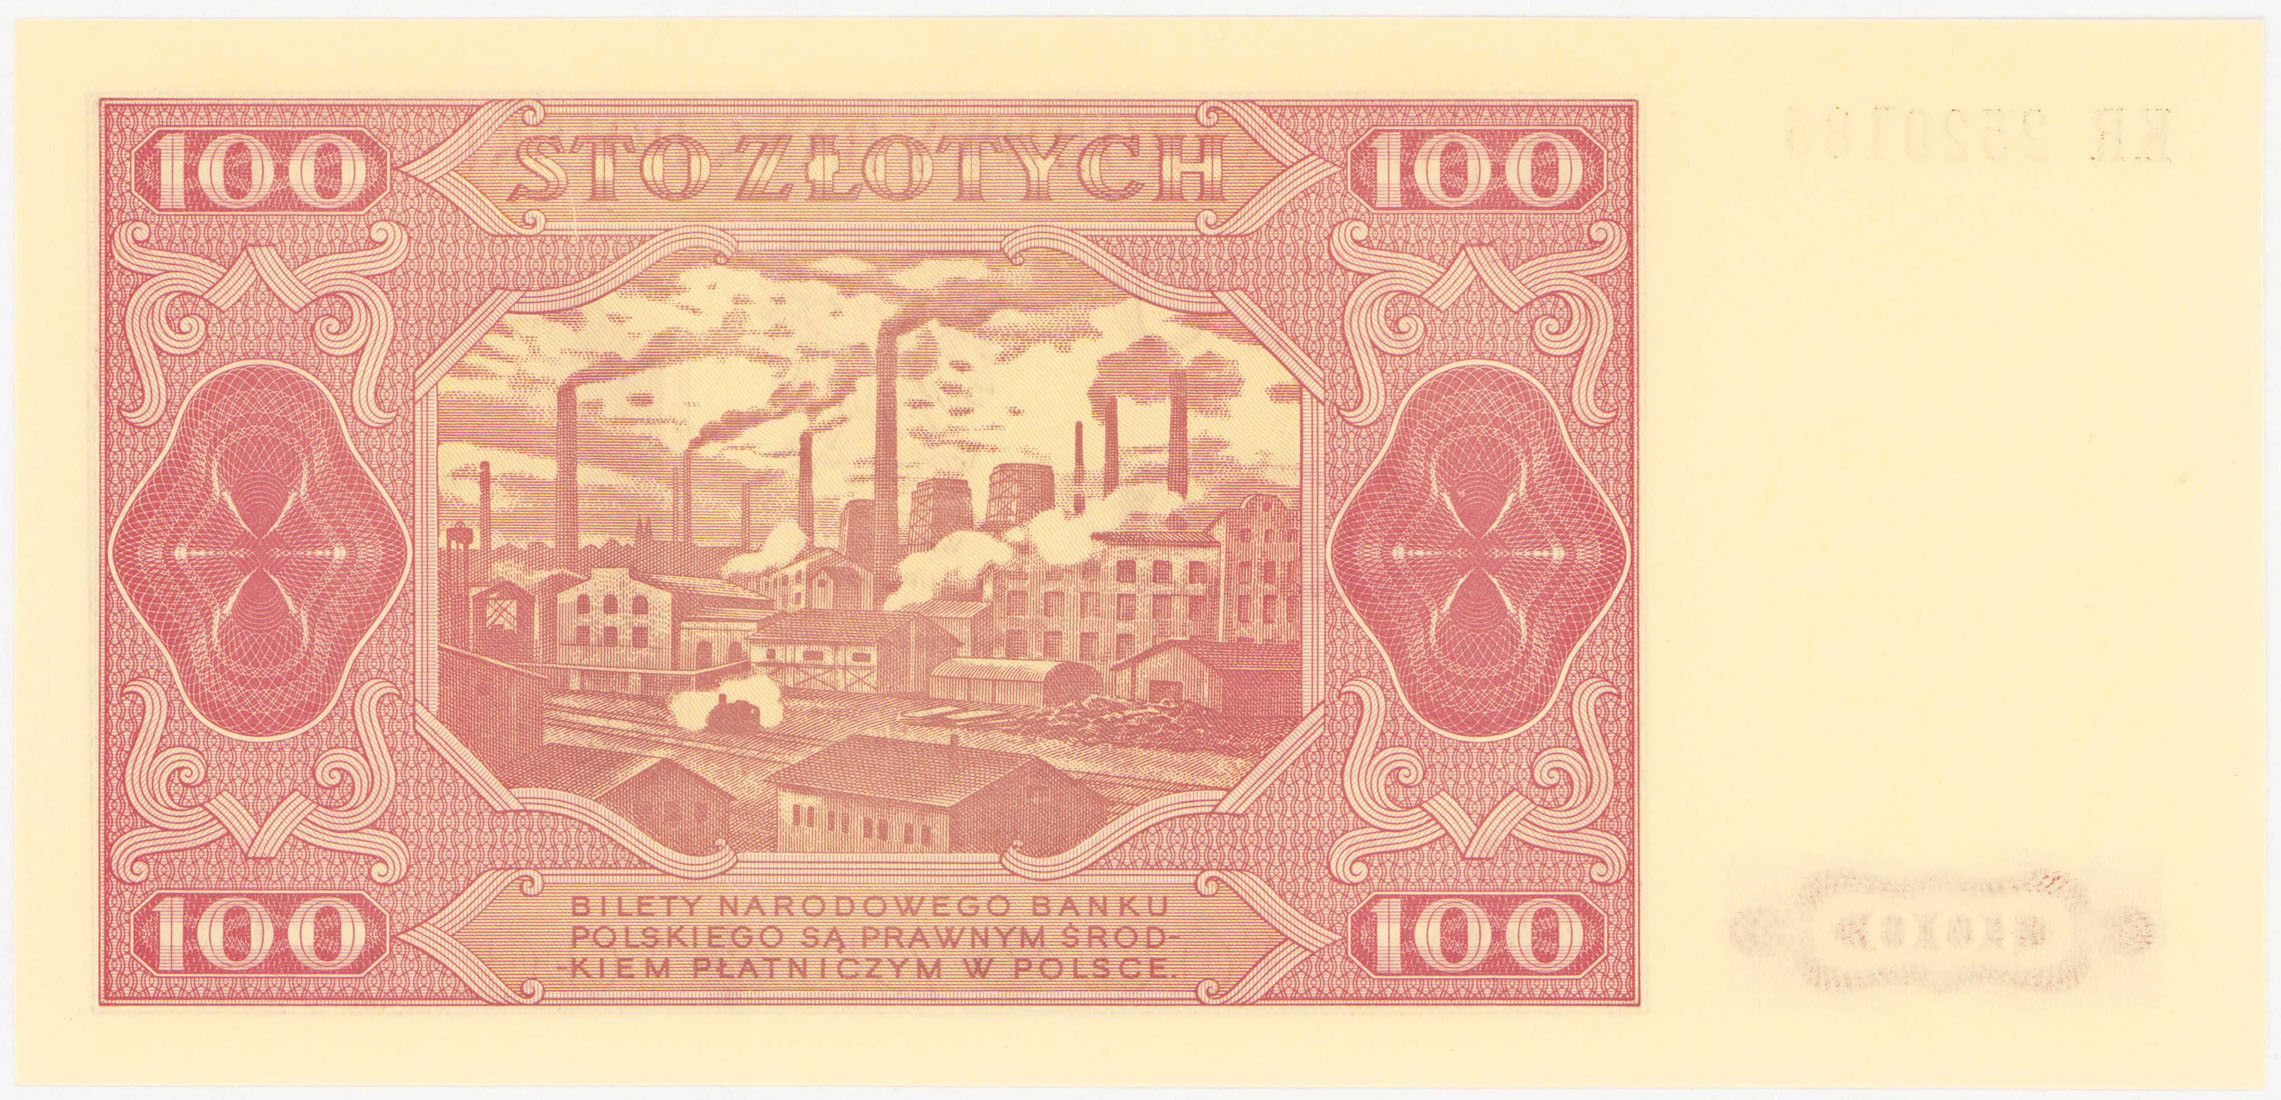 100 złotych 1948 seria KR – PIĘKNE